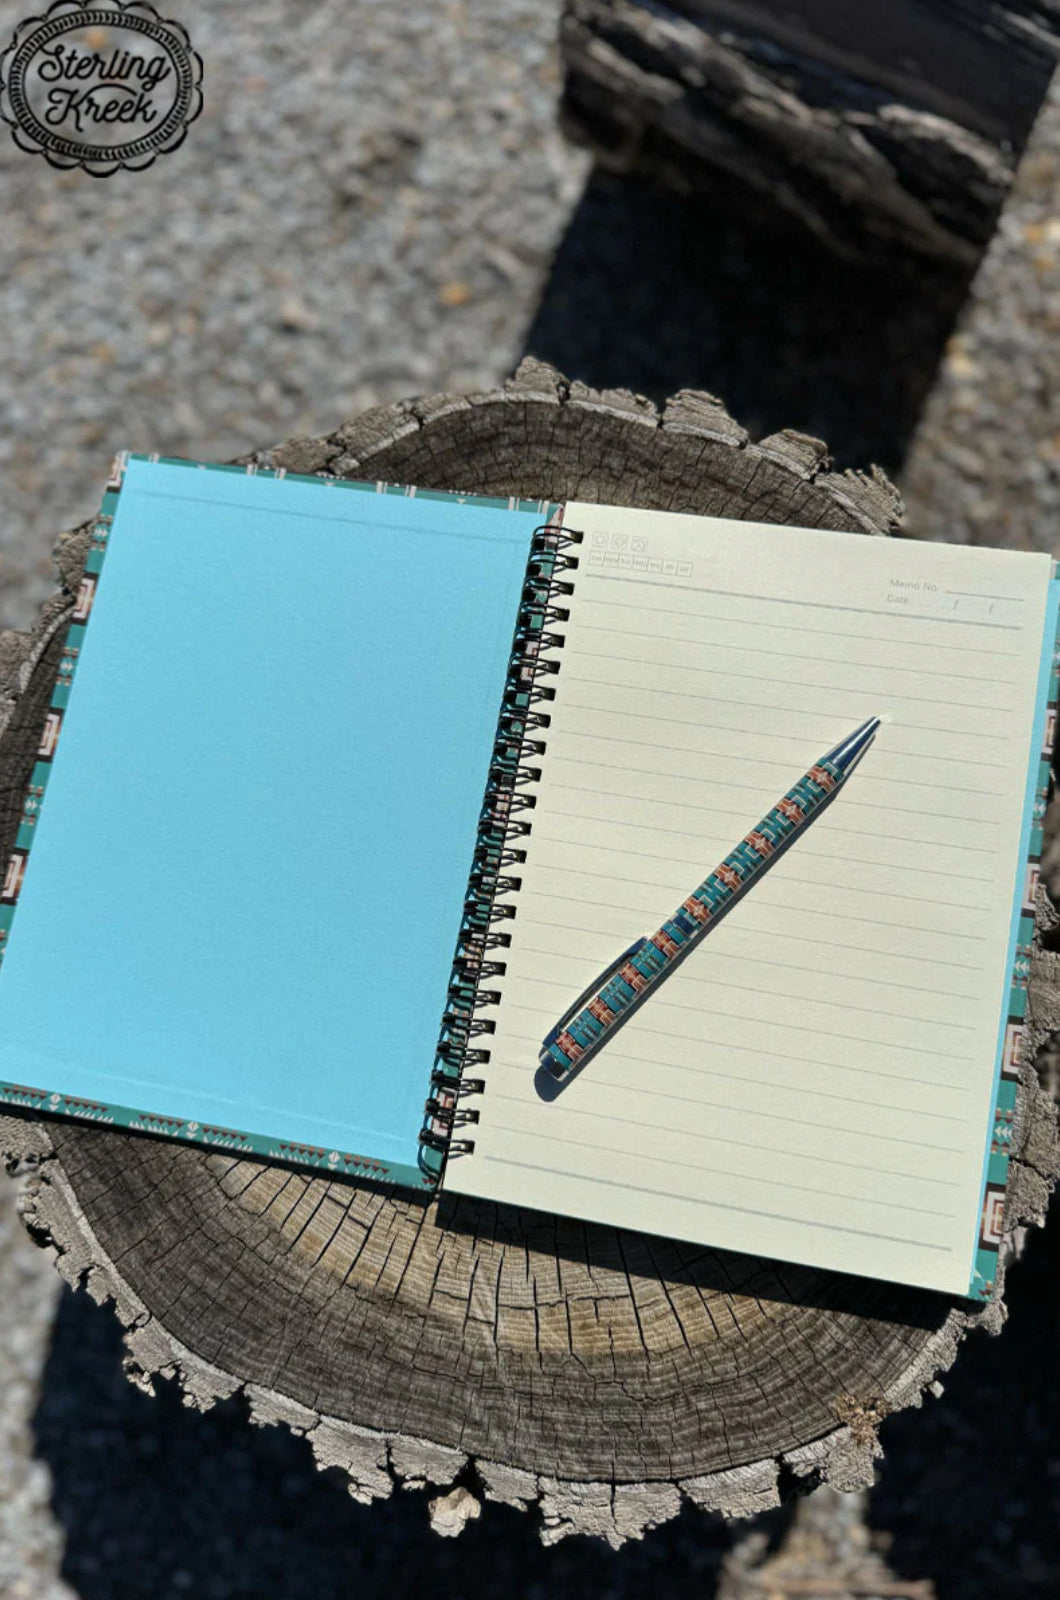 Barton Kreek Notebook